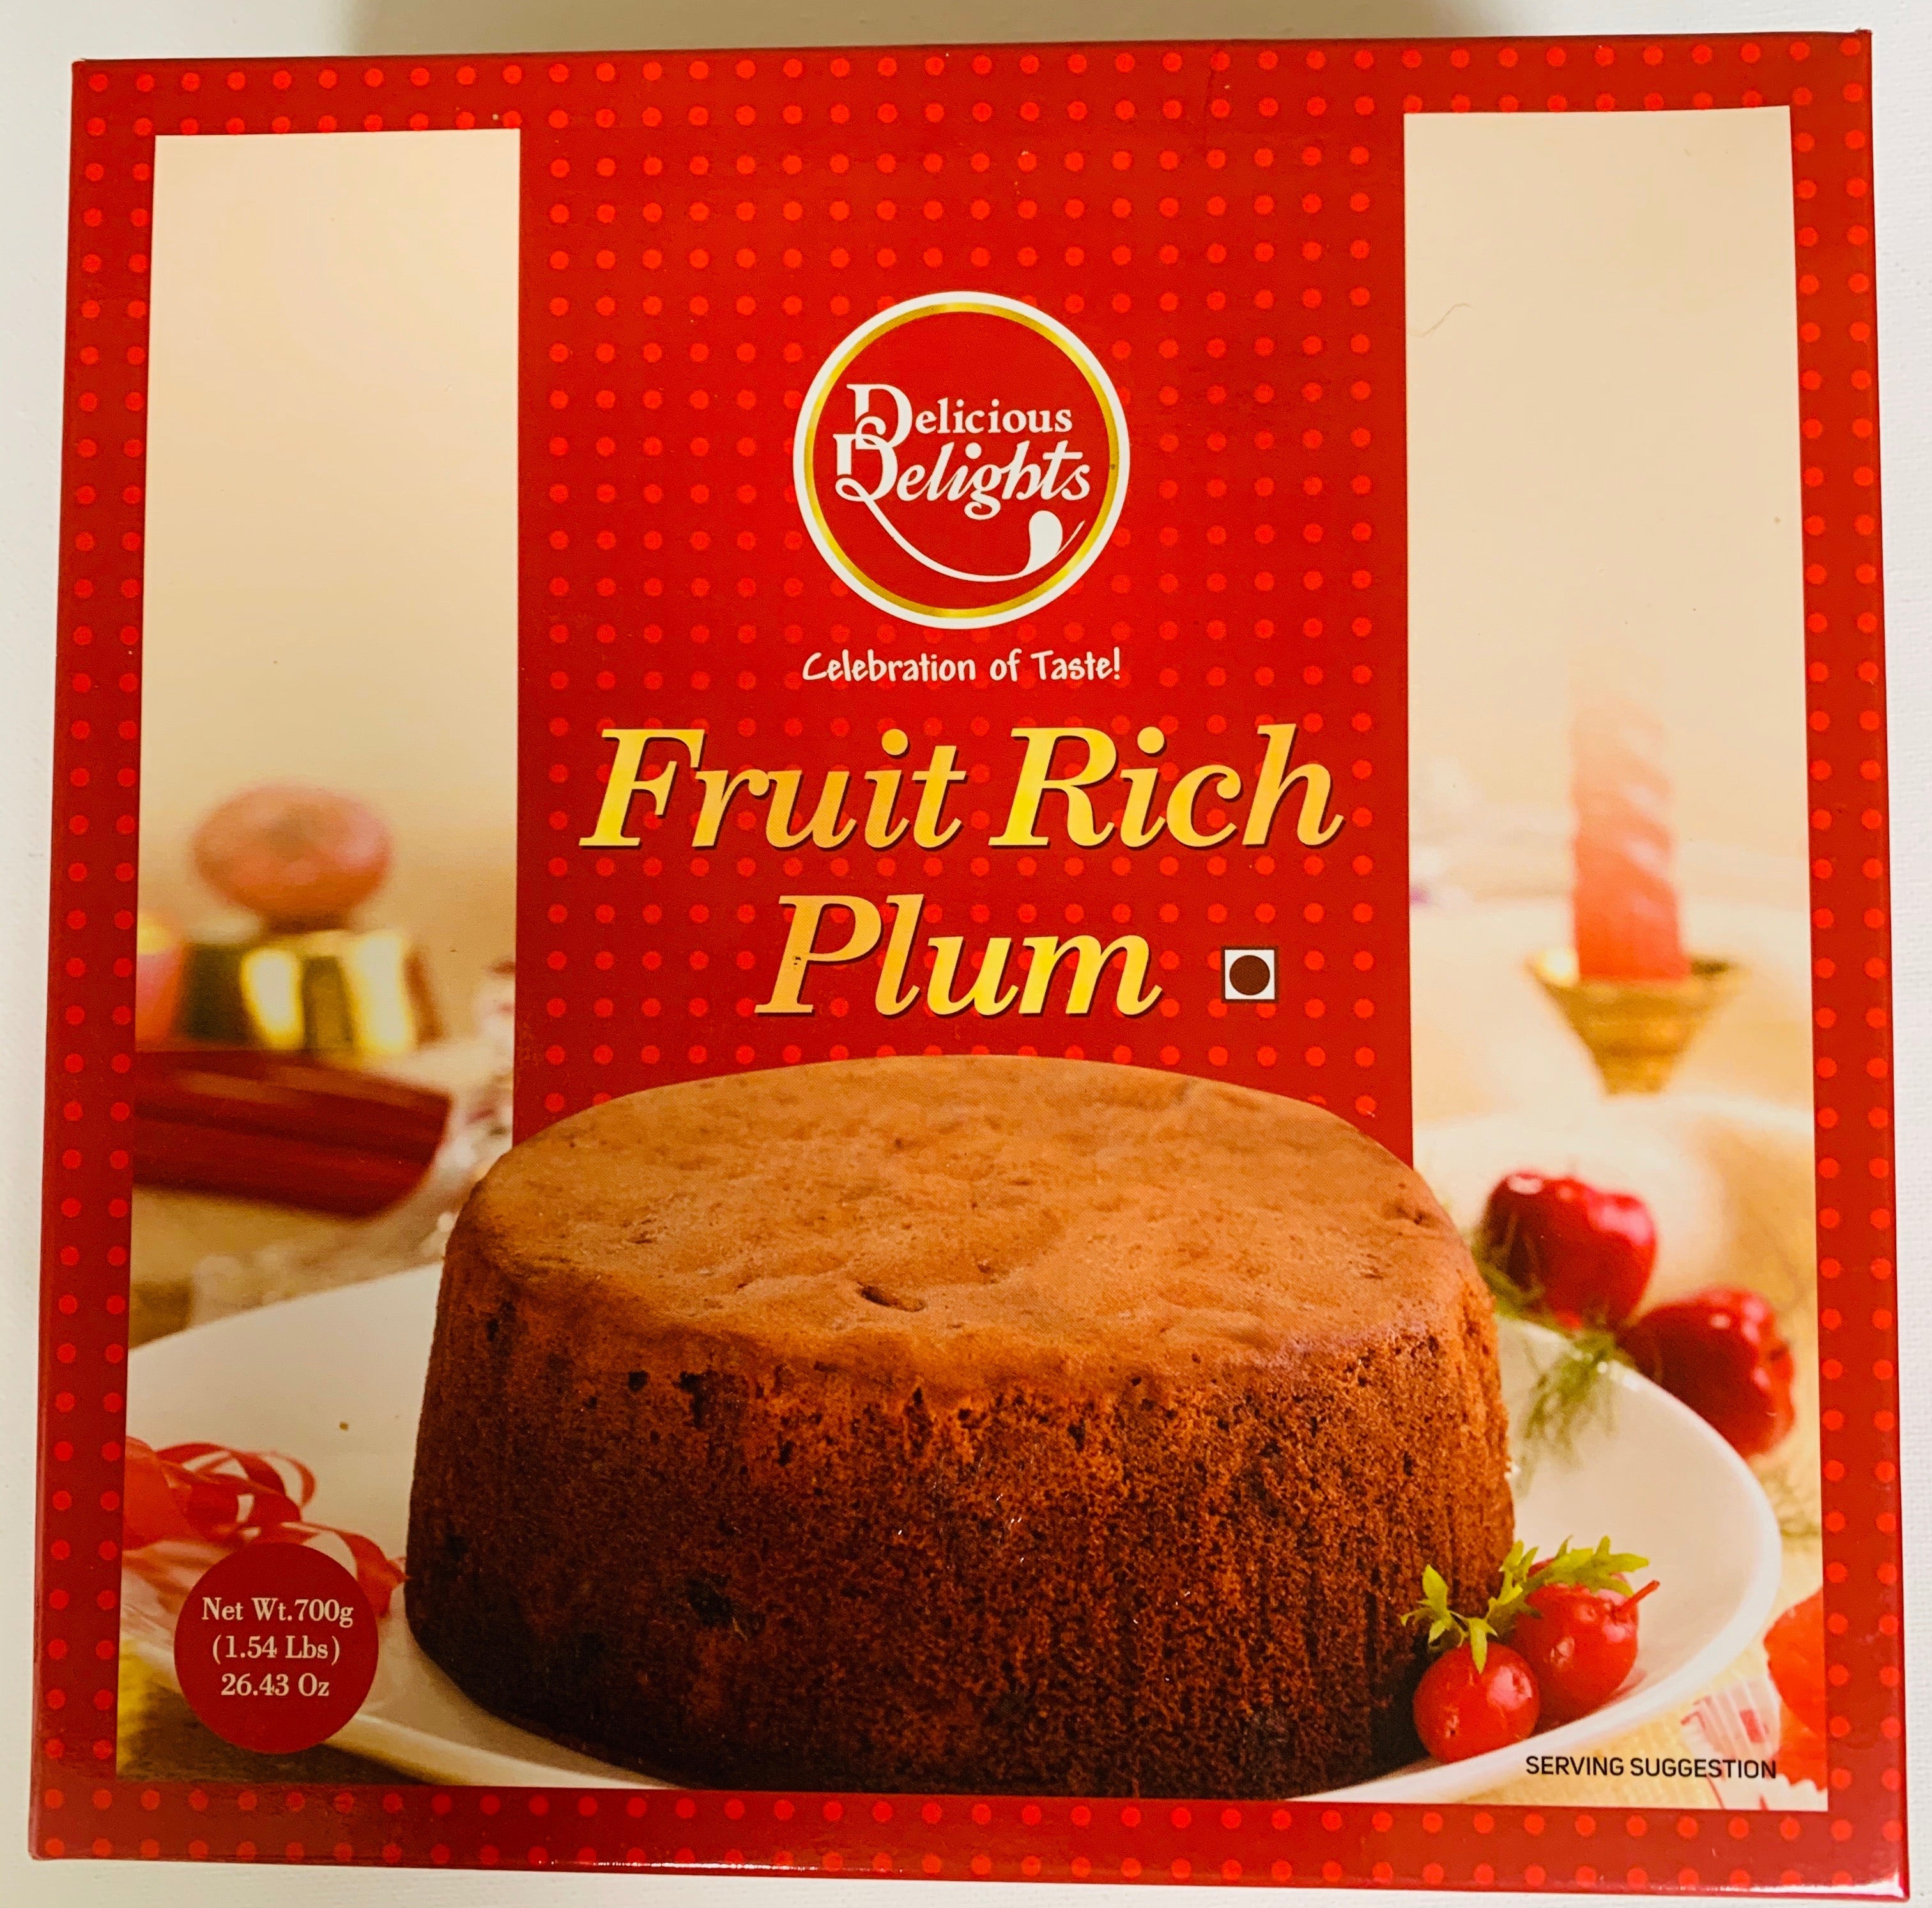 Plum cake - Wikipedia